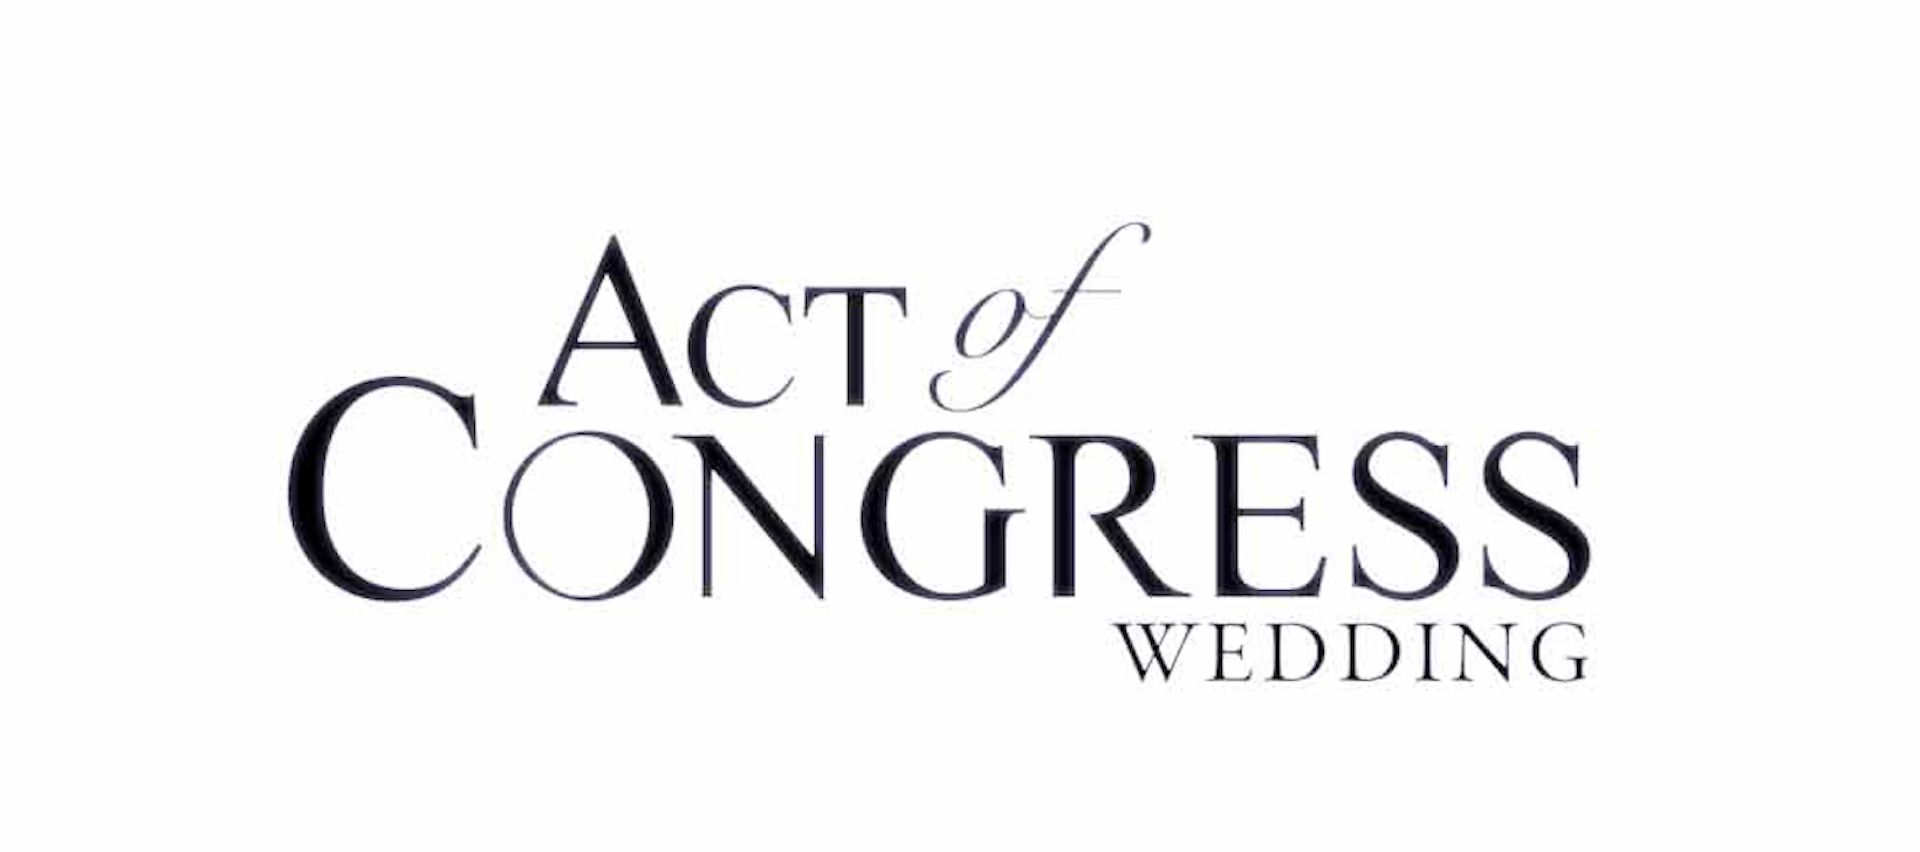 Act of Congress Wedding